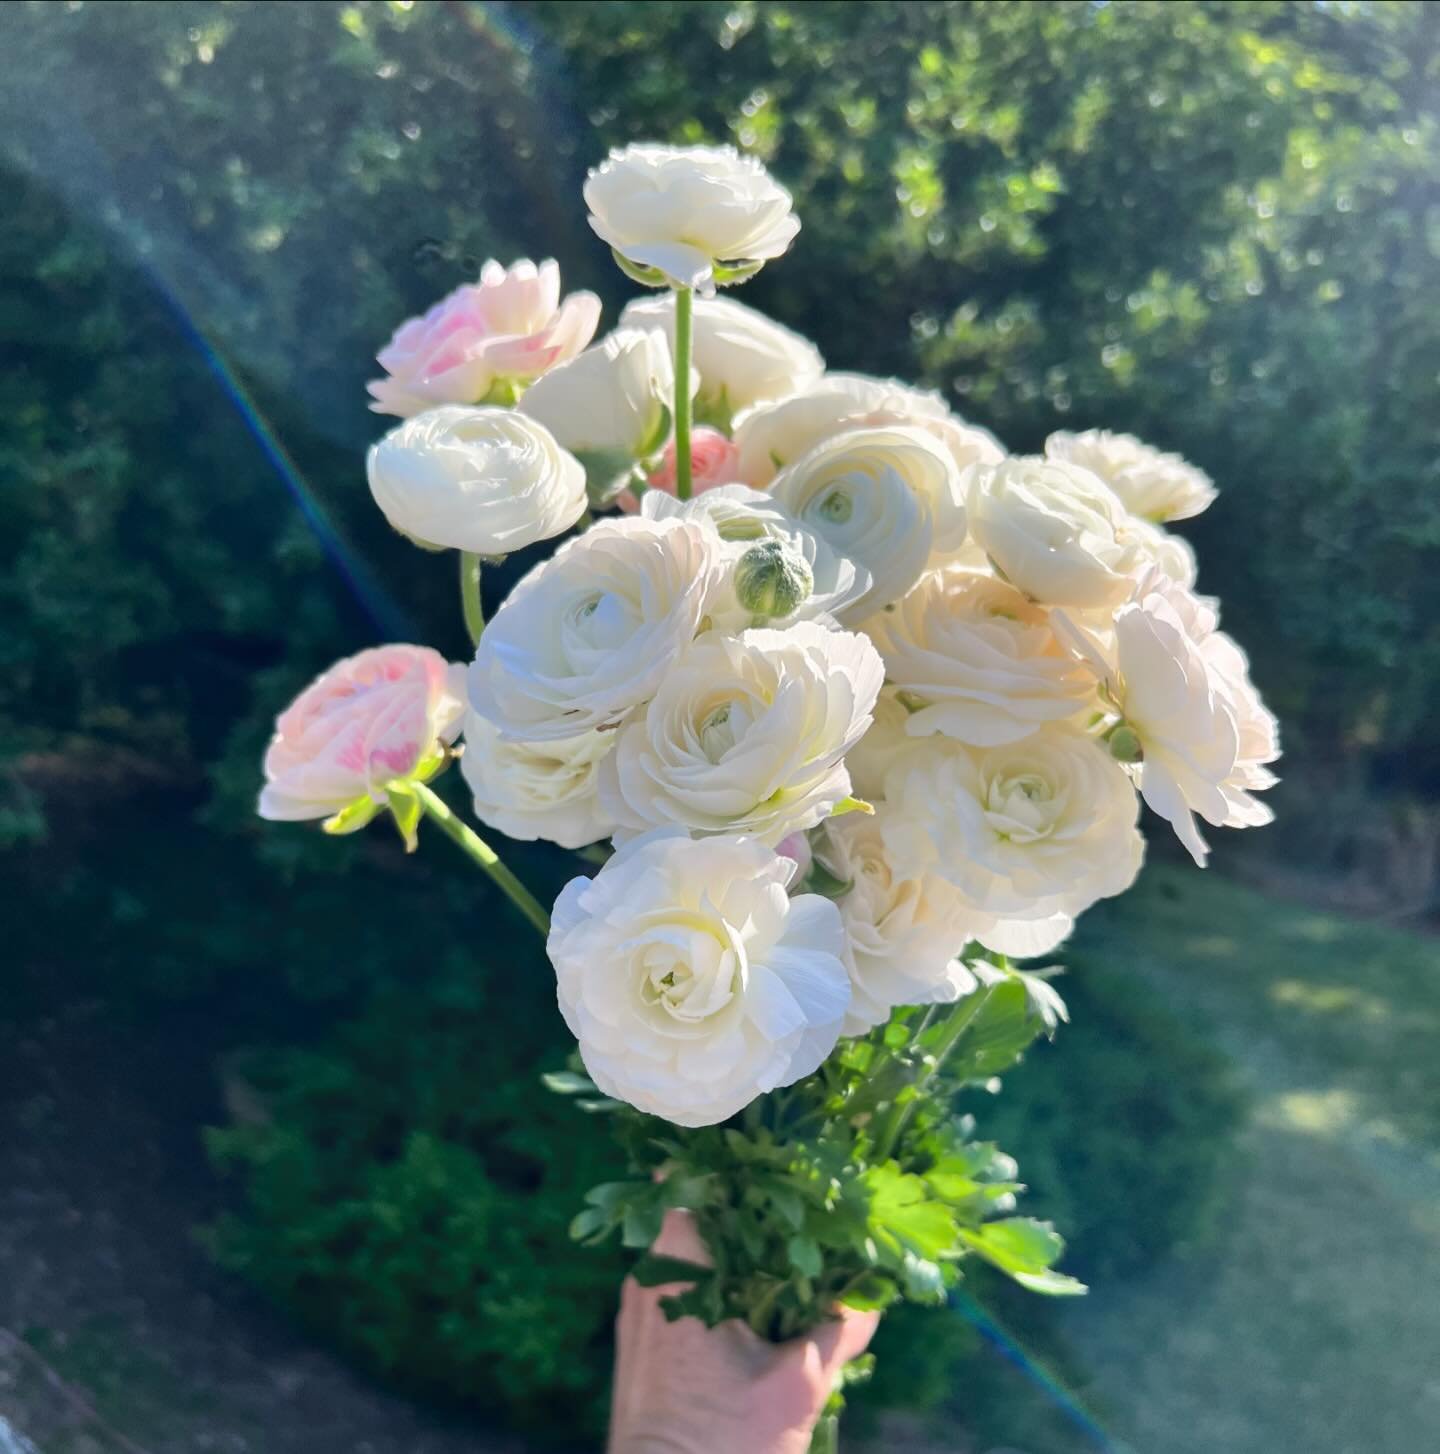 Did angels just shine on these? I swear I heard the chorus. 😂. #fluffyflowers #ranunculus #springflowersmakemehappy #ncweddingflowers #diyweddingflowers #ncflowers #ncgarden #ncgardener #pastelsforspring #flowerbouquet #bouquet